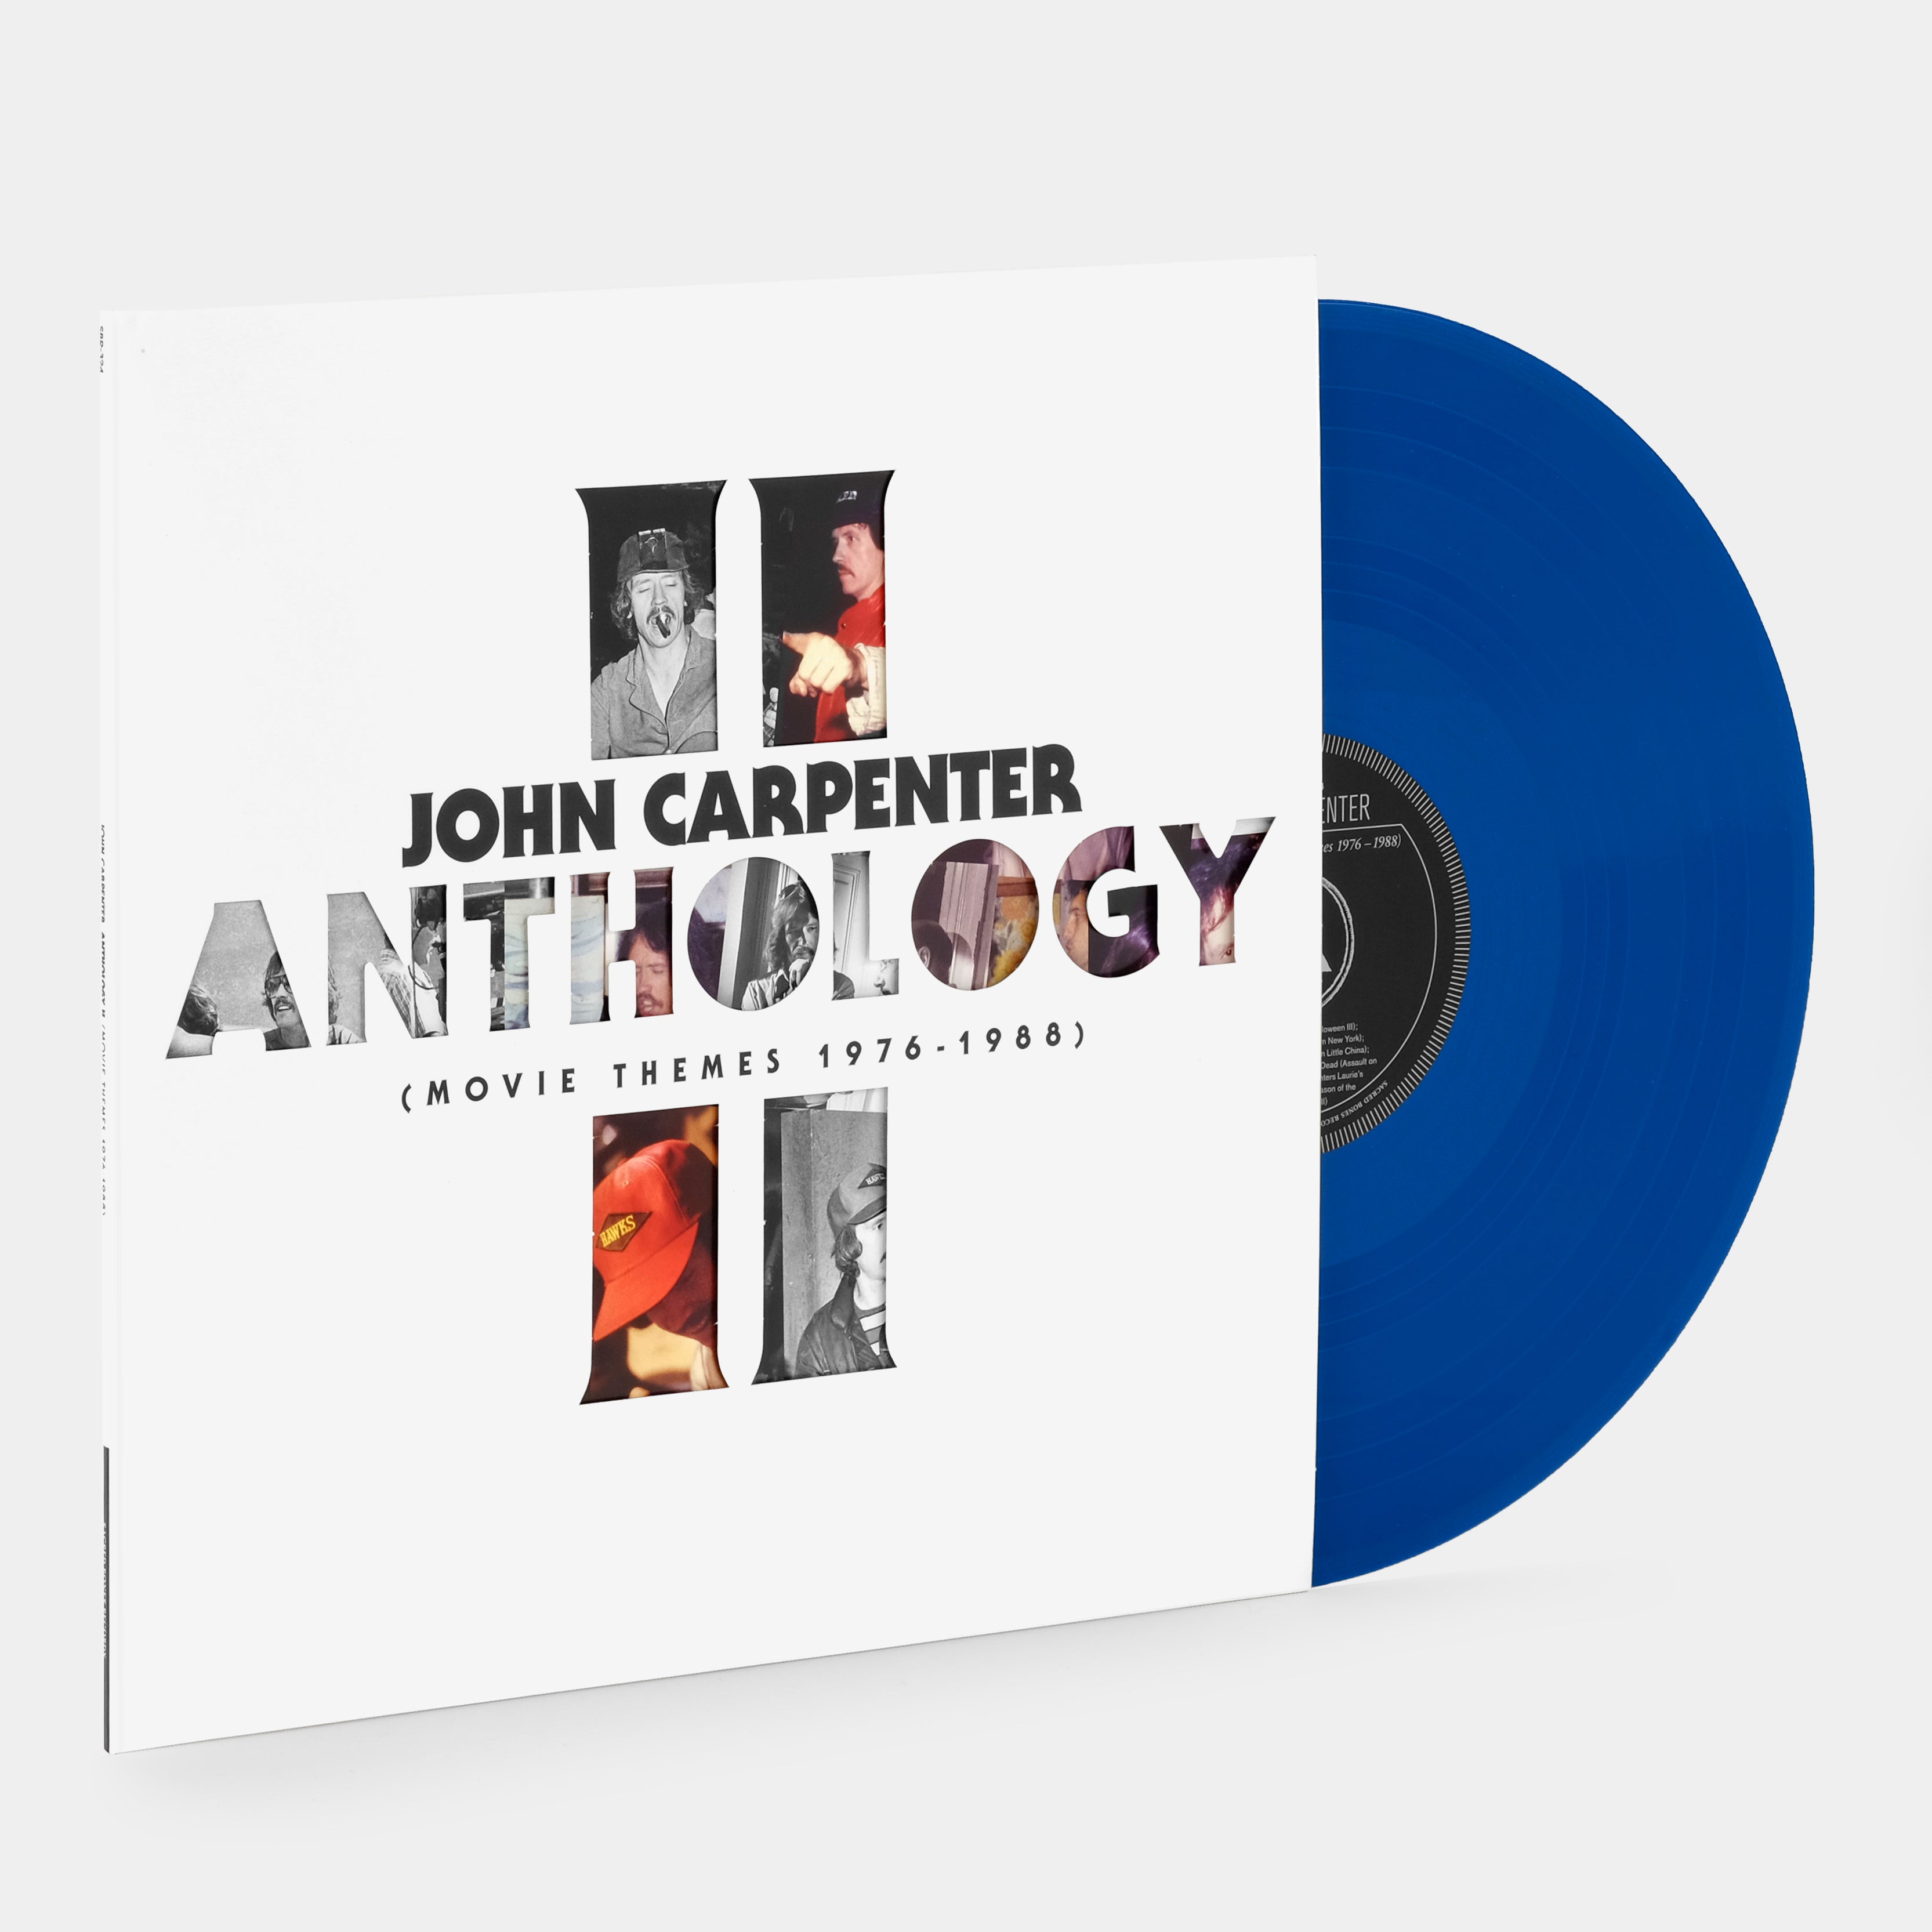 John Carpenter - Anthology II (Movie Themes 1976-1988) LP Blue [The Thing] Vinyl Record